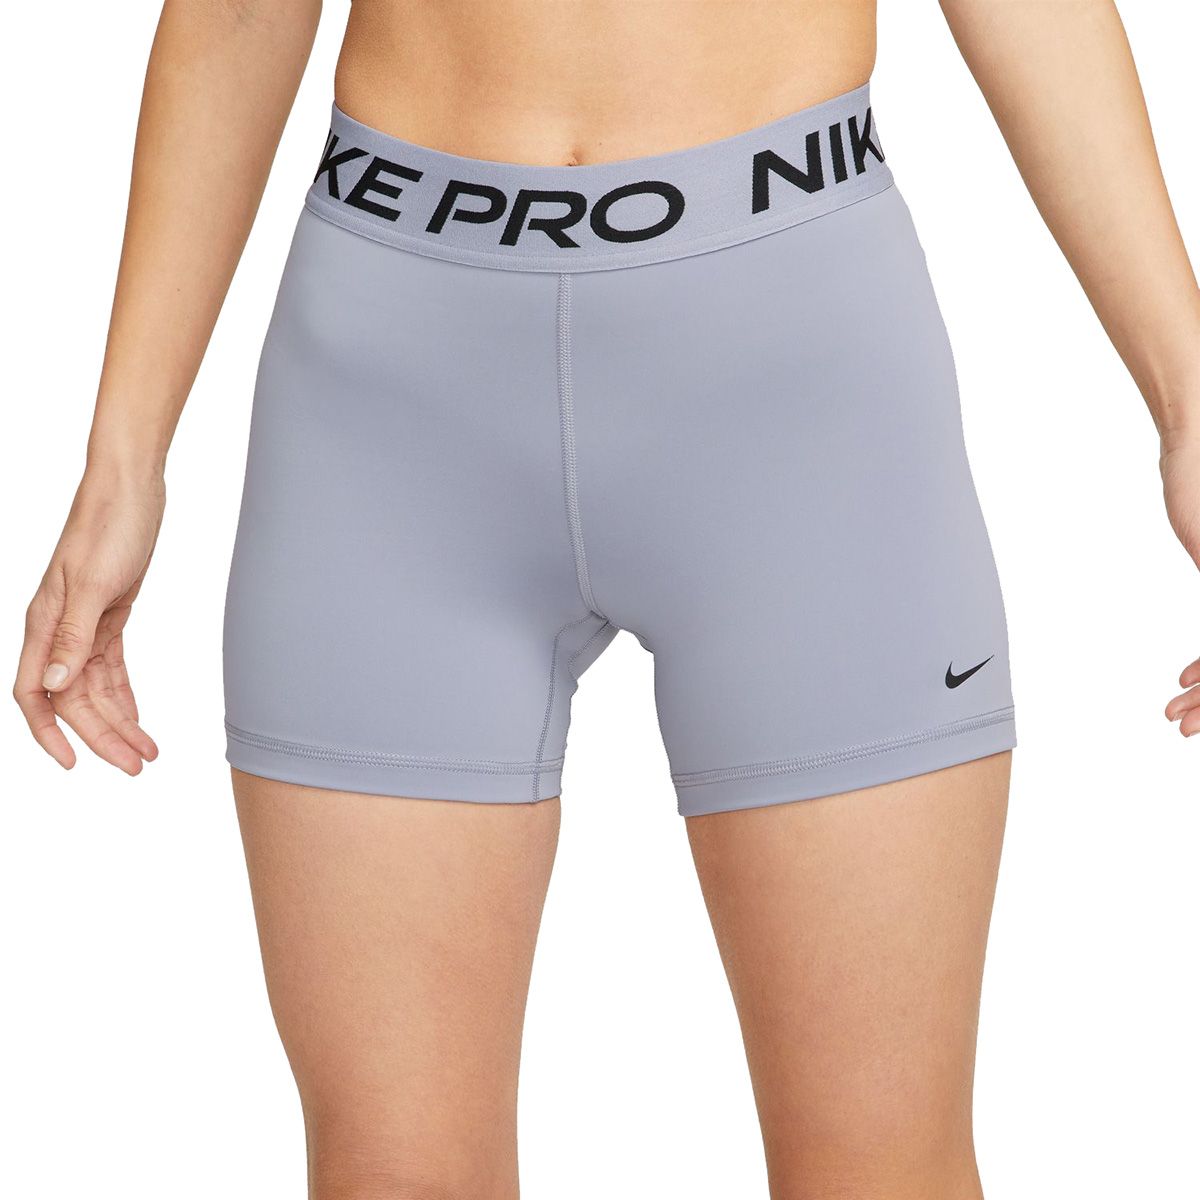 Nike Pro shorts. Шорты компрессионные w NP 365 short 5in. Nike Pro шорты.